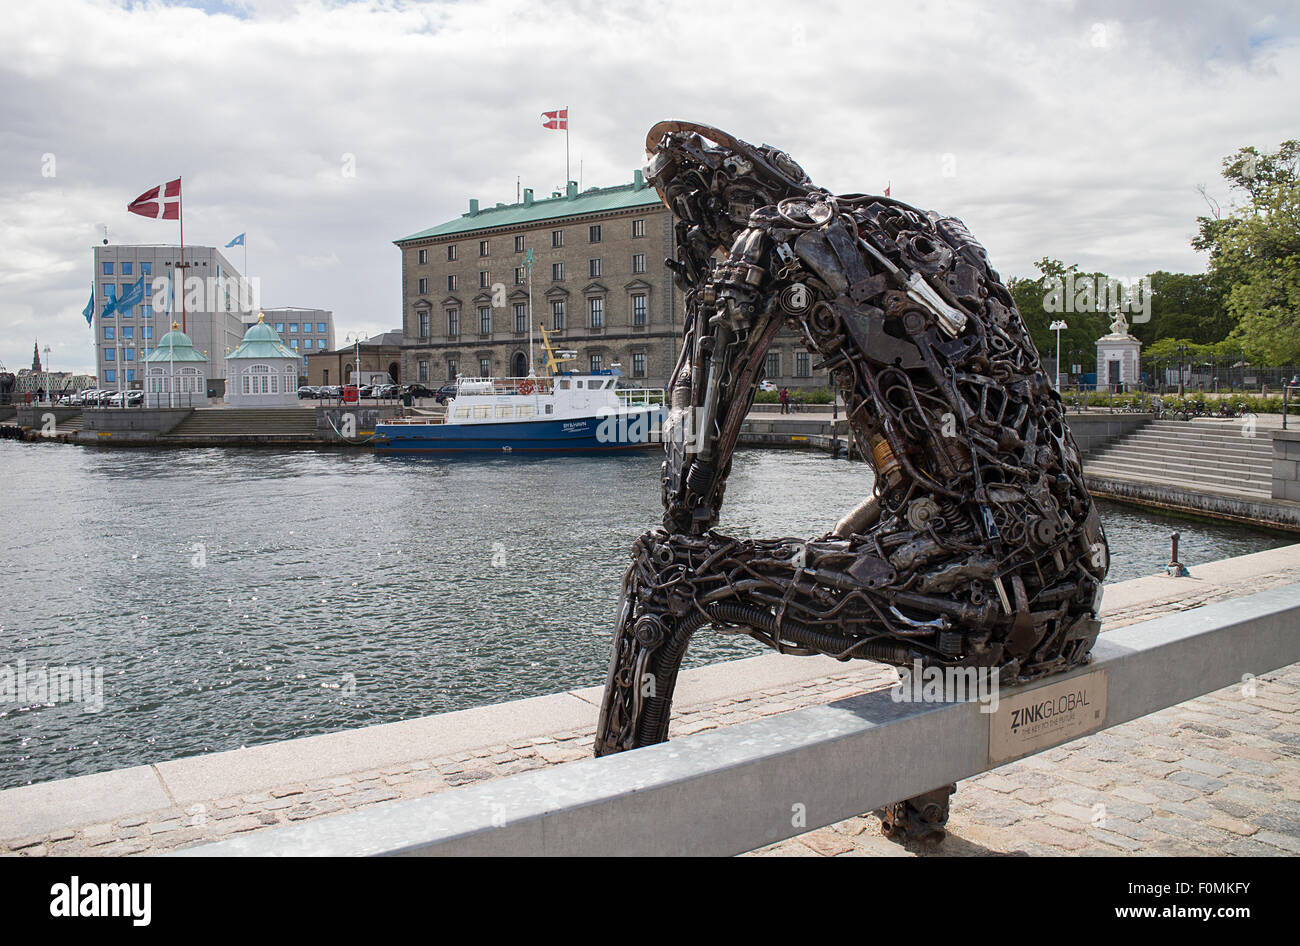 Zinkglobal (globale visionäre) Schrott-Metall-Statue von Kim Michael, Copenhagen Stockfoto